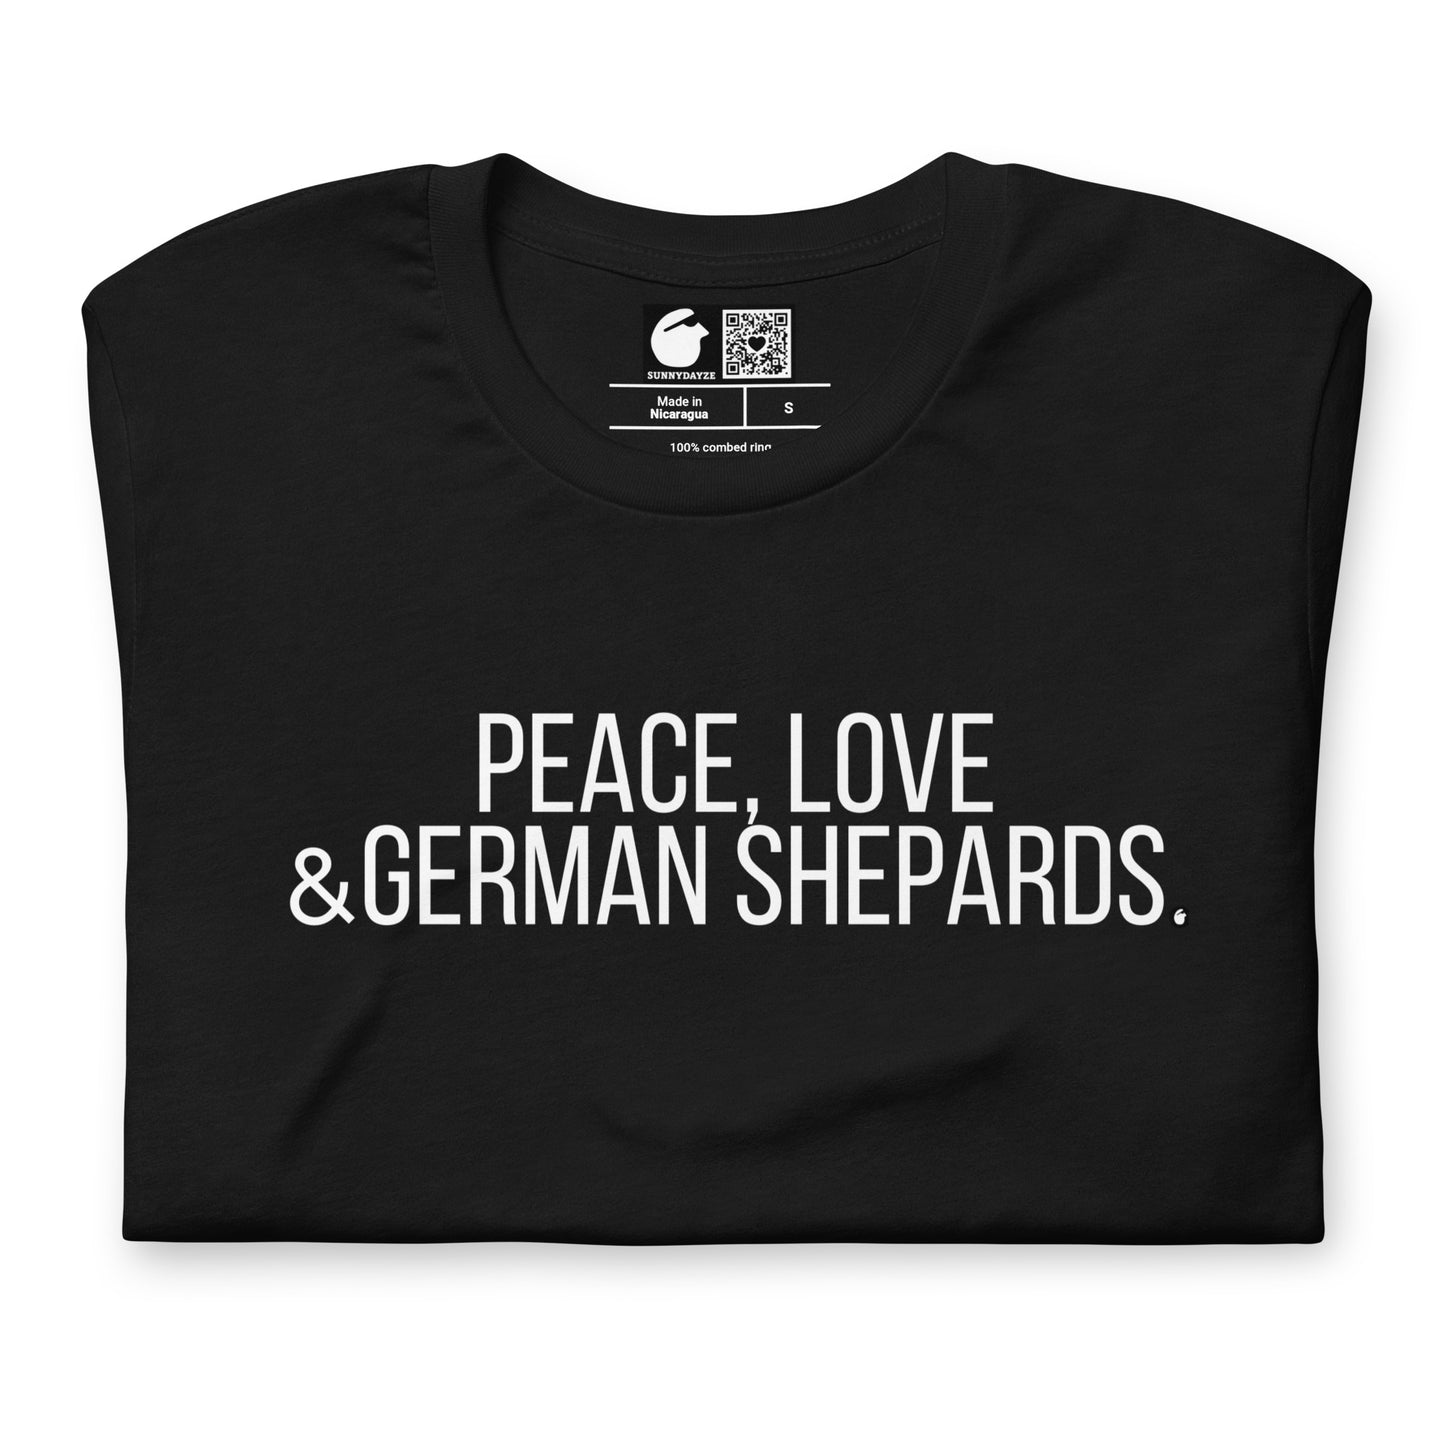 GERMAN SHEPARDS Short-Sleeve Unisex t-shirt